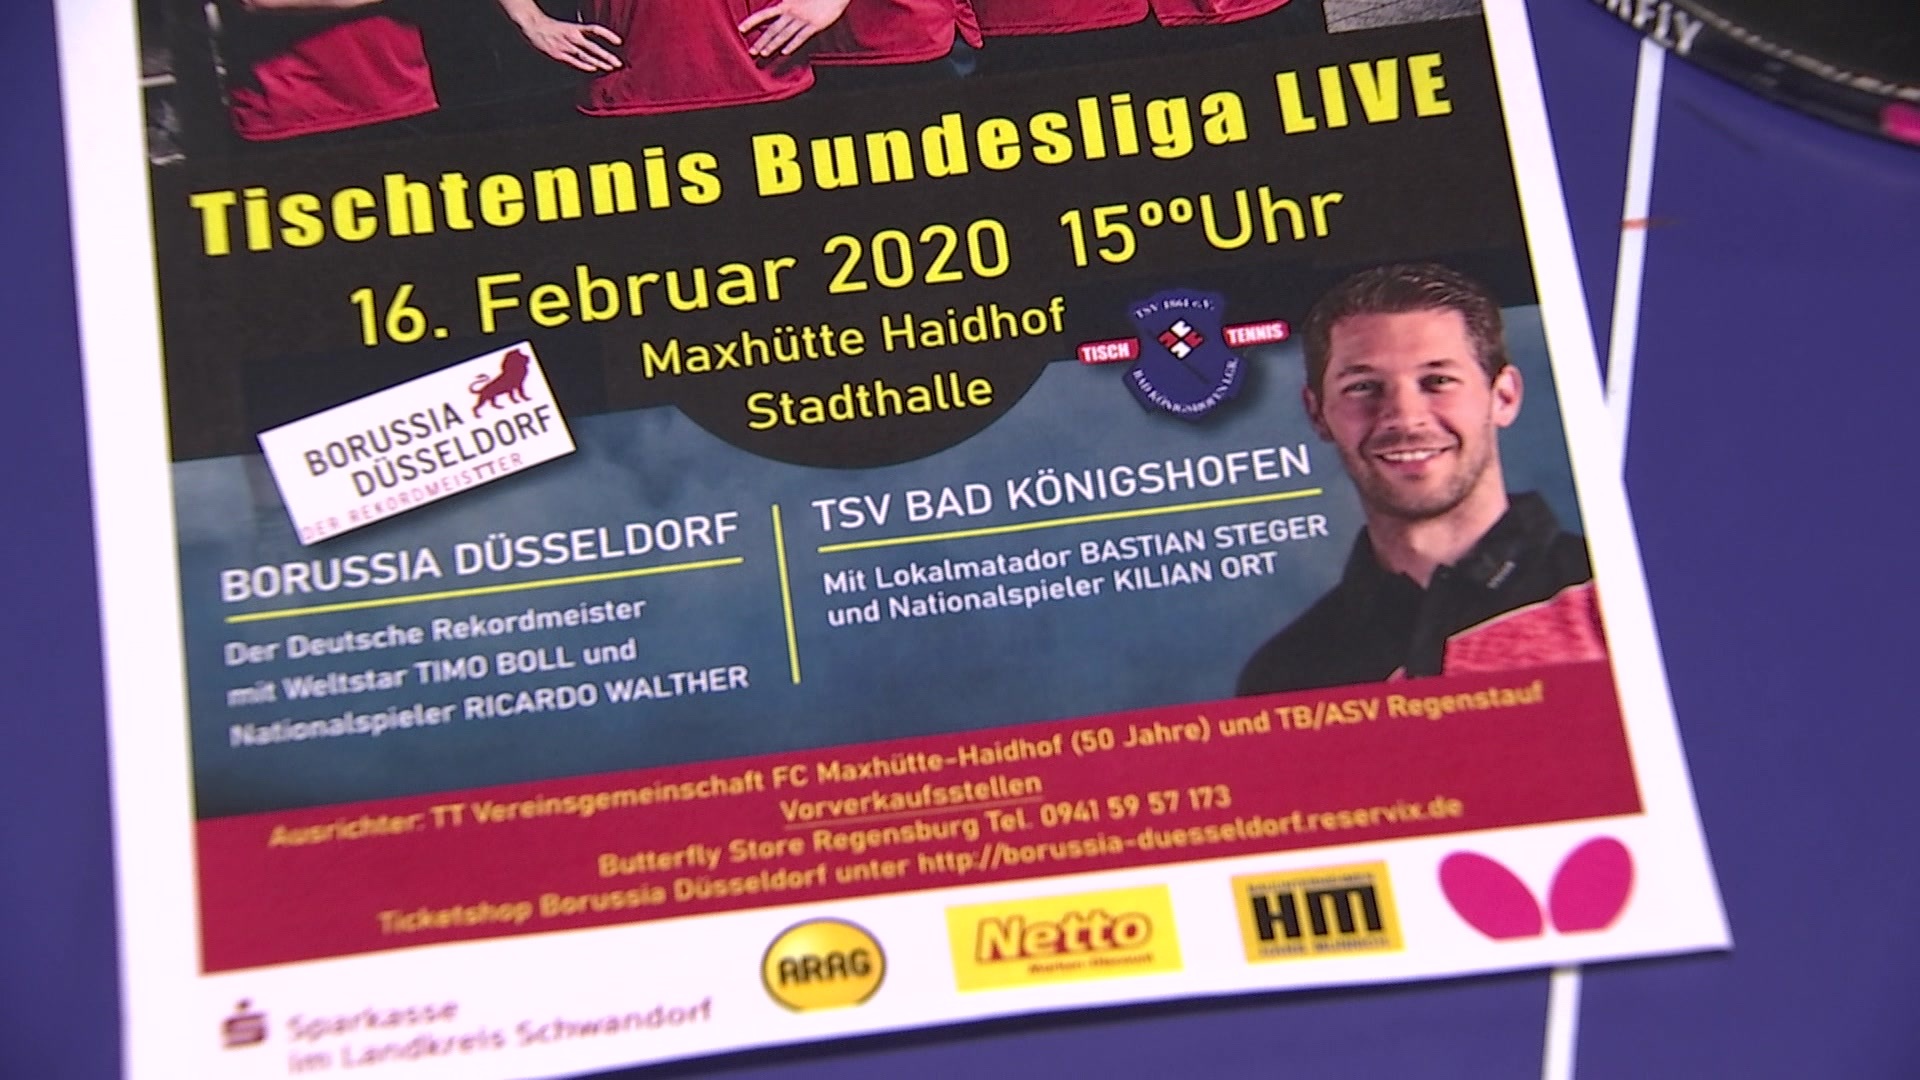 Mitte Februar kommt Tischtennis-Star Timo Boll nach Ostbayern TVA